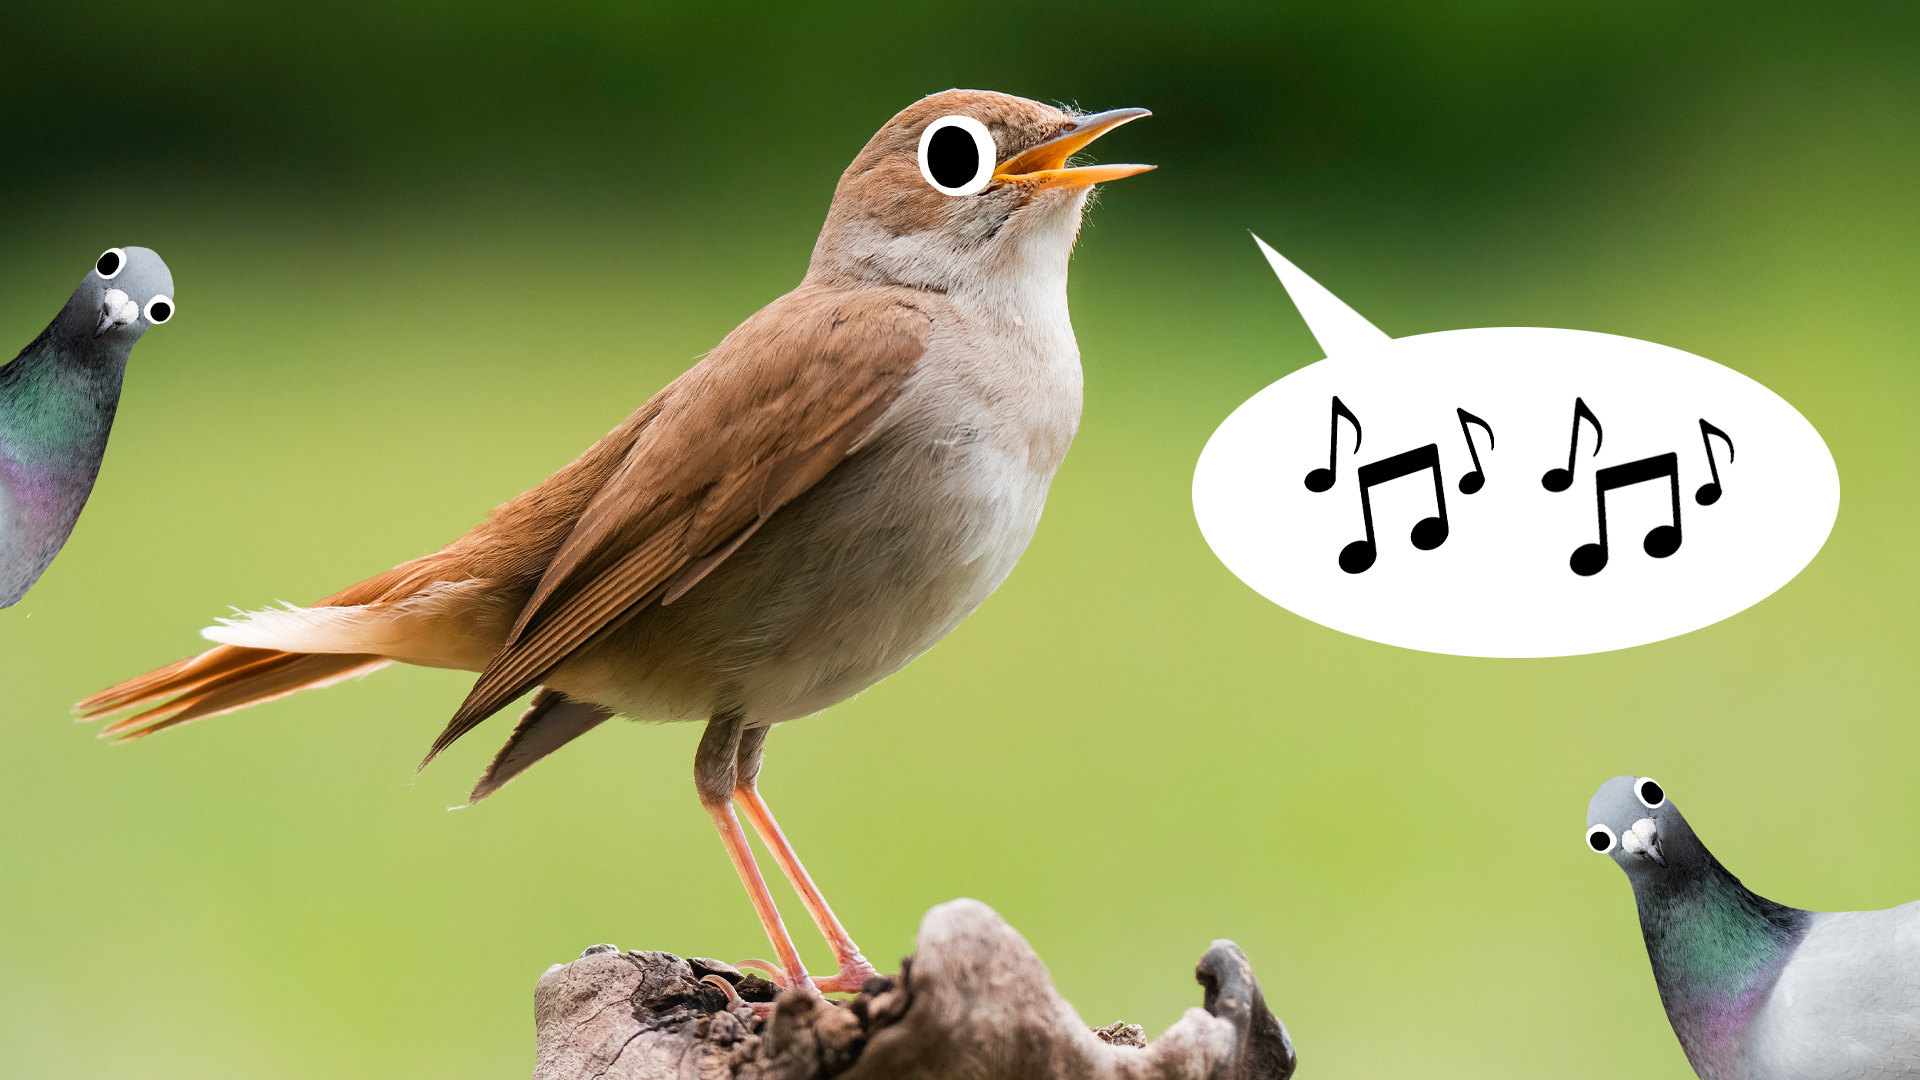 A bird singing